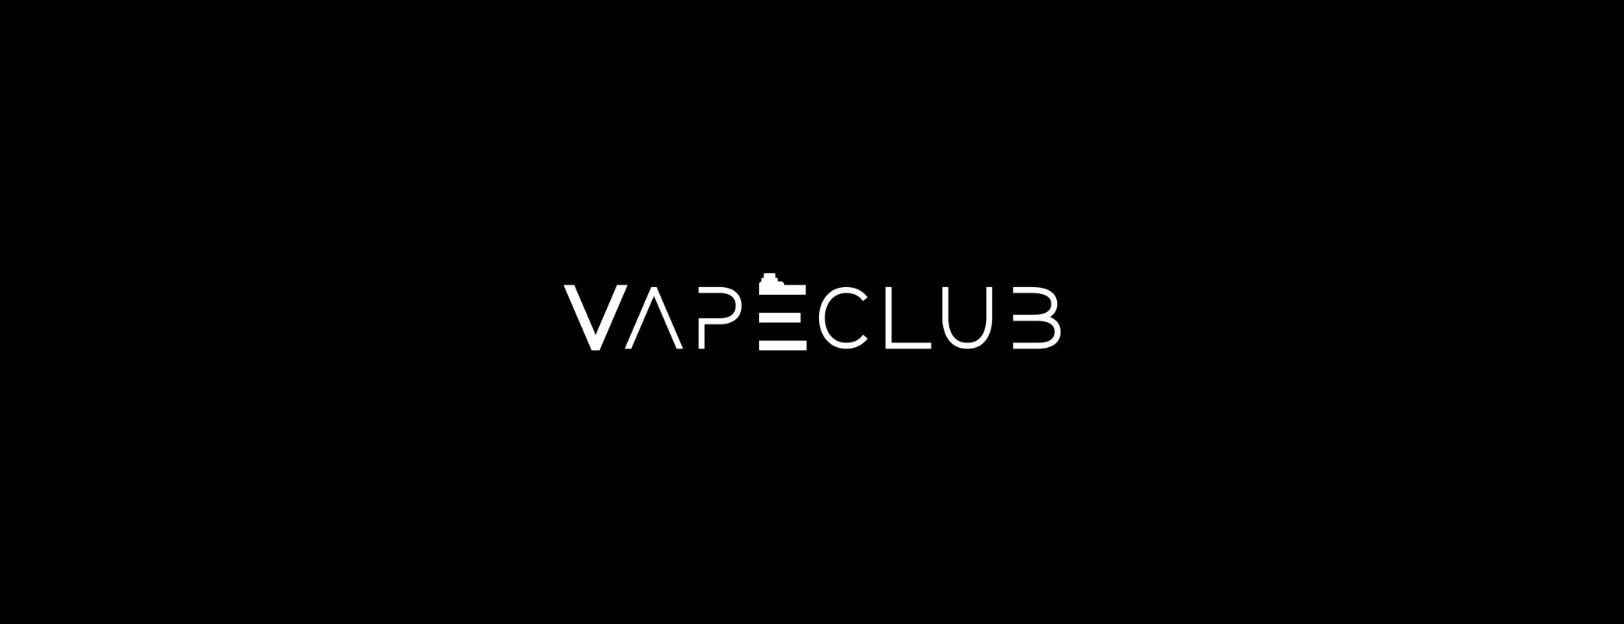 Vape Club 503